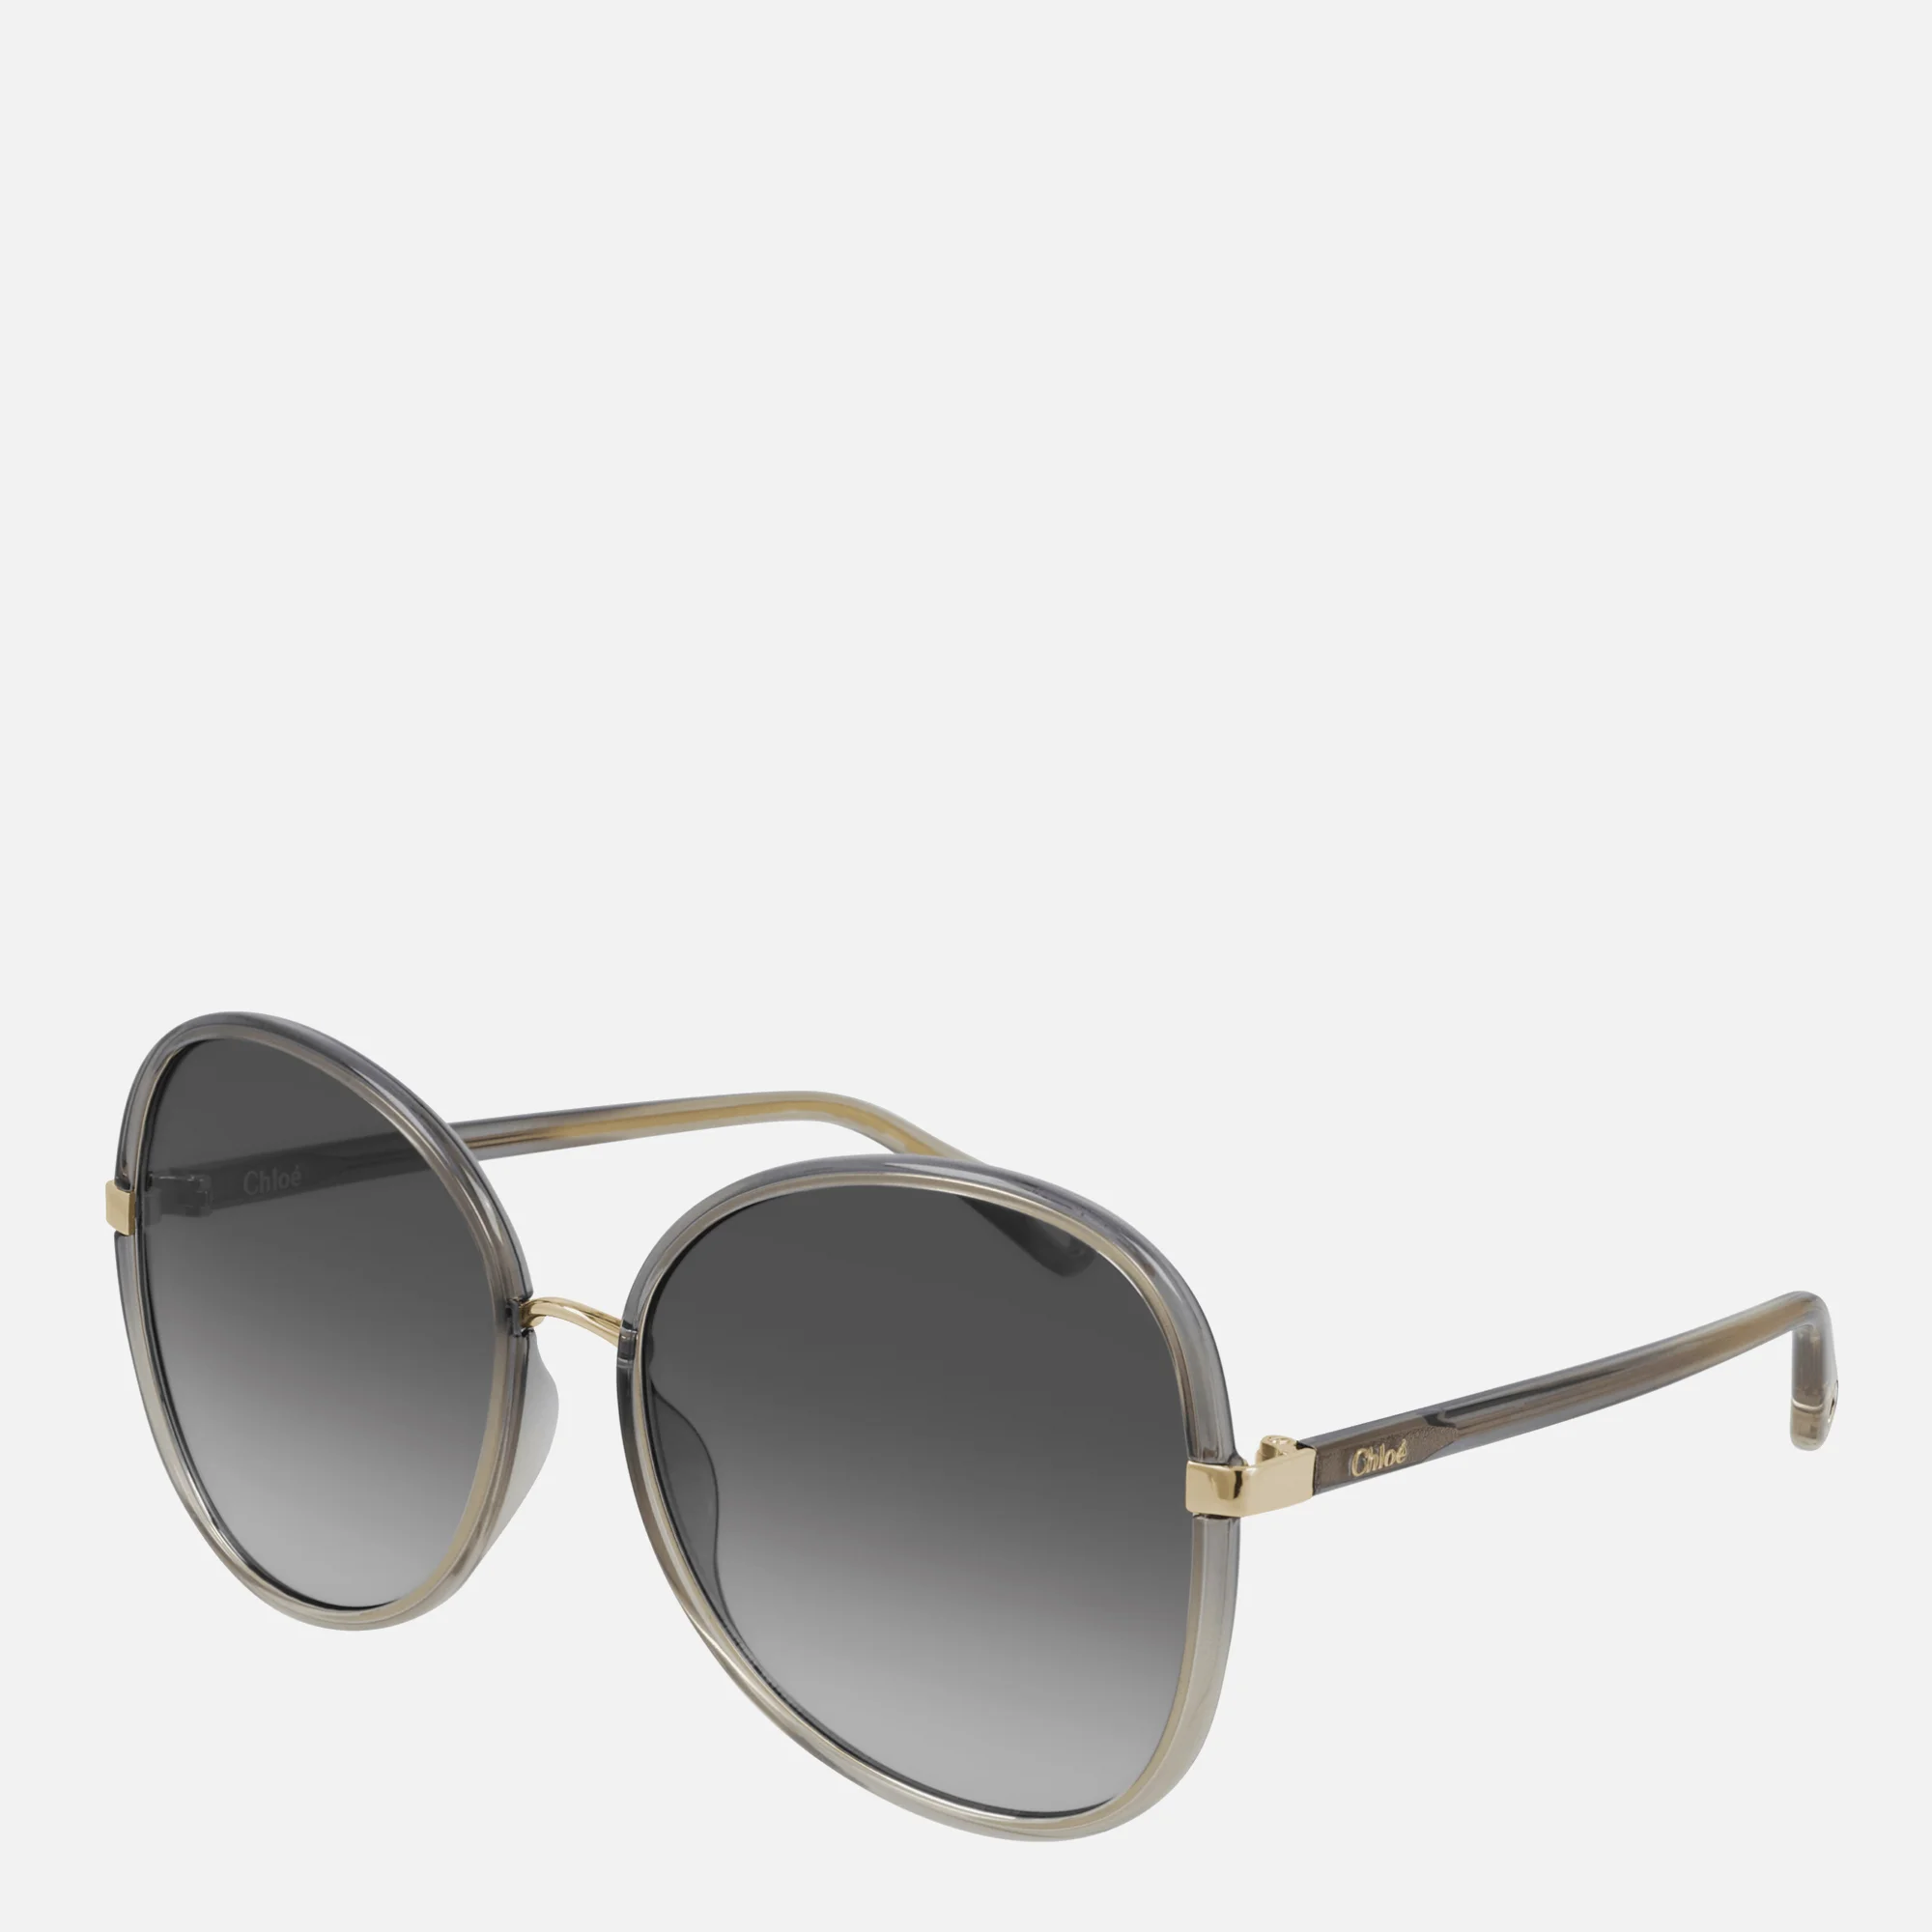 Chloé Women's Oval Oversized Acetate Sunglasses - Grey Image 1